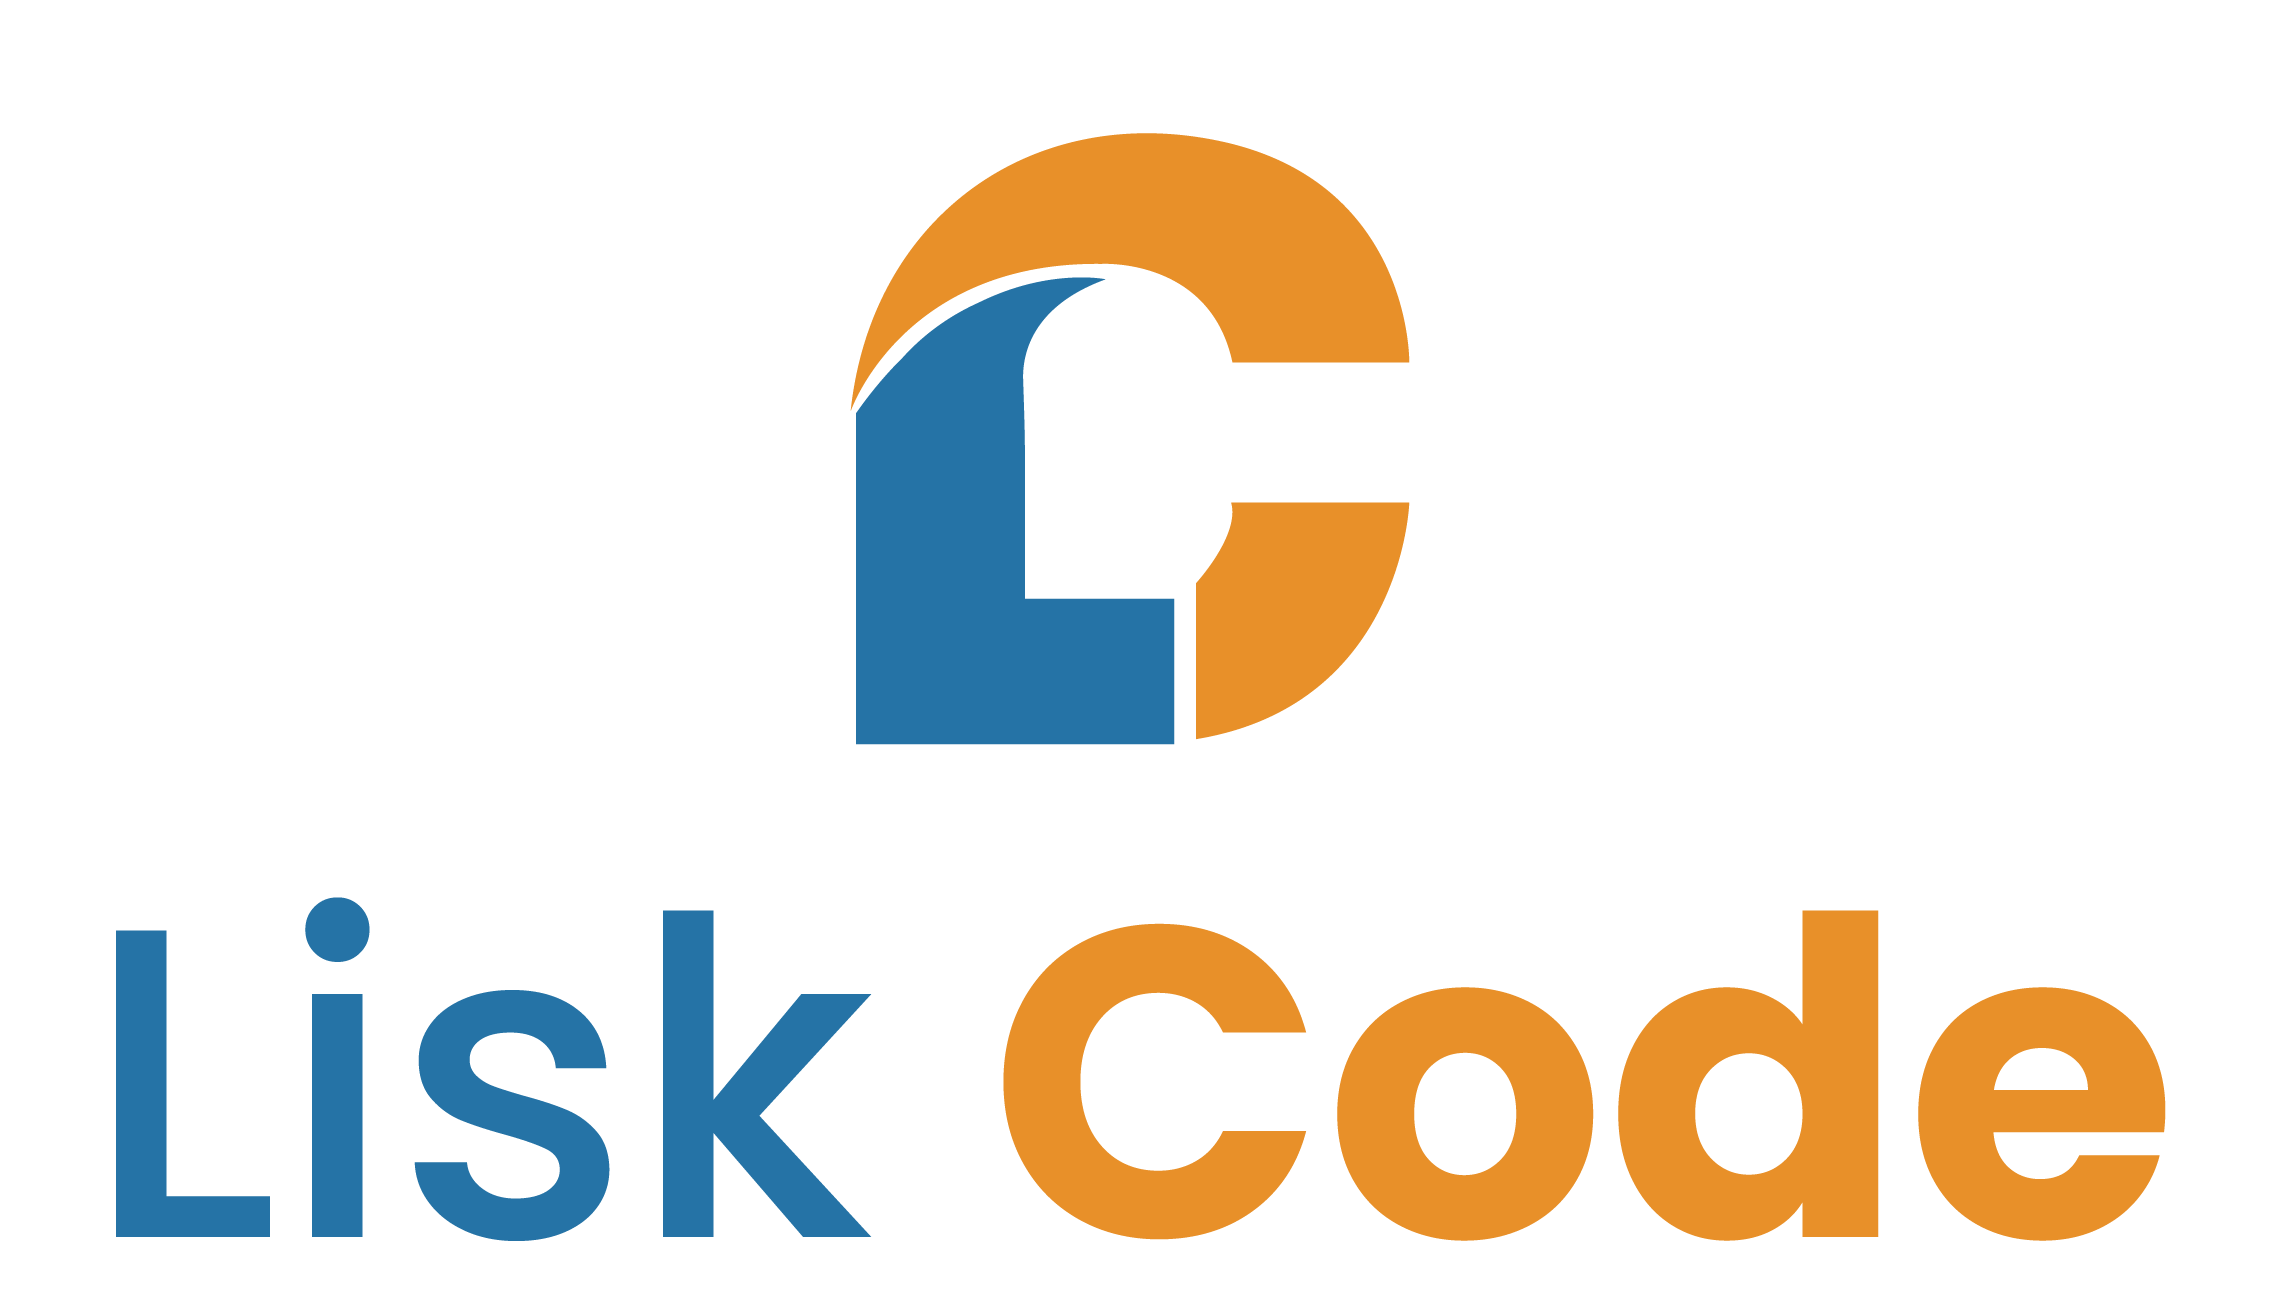 Lisk Code - Activa tu cuenta en Lisk Code